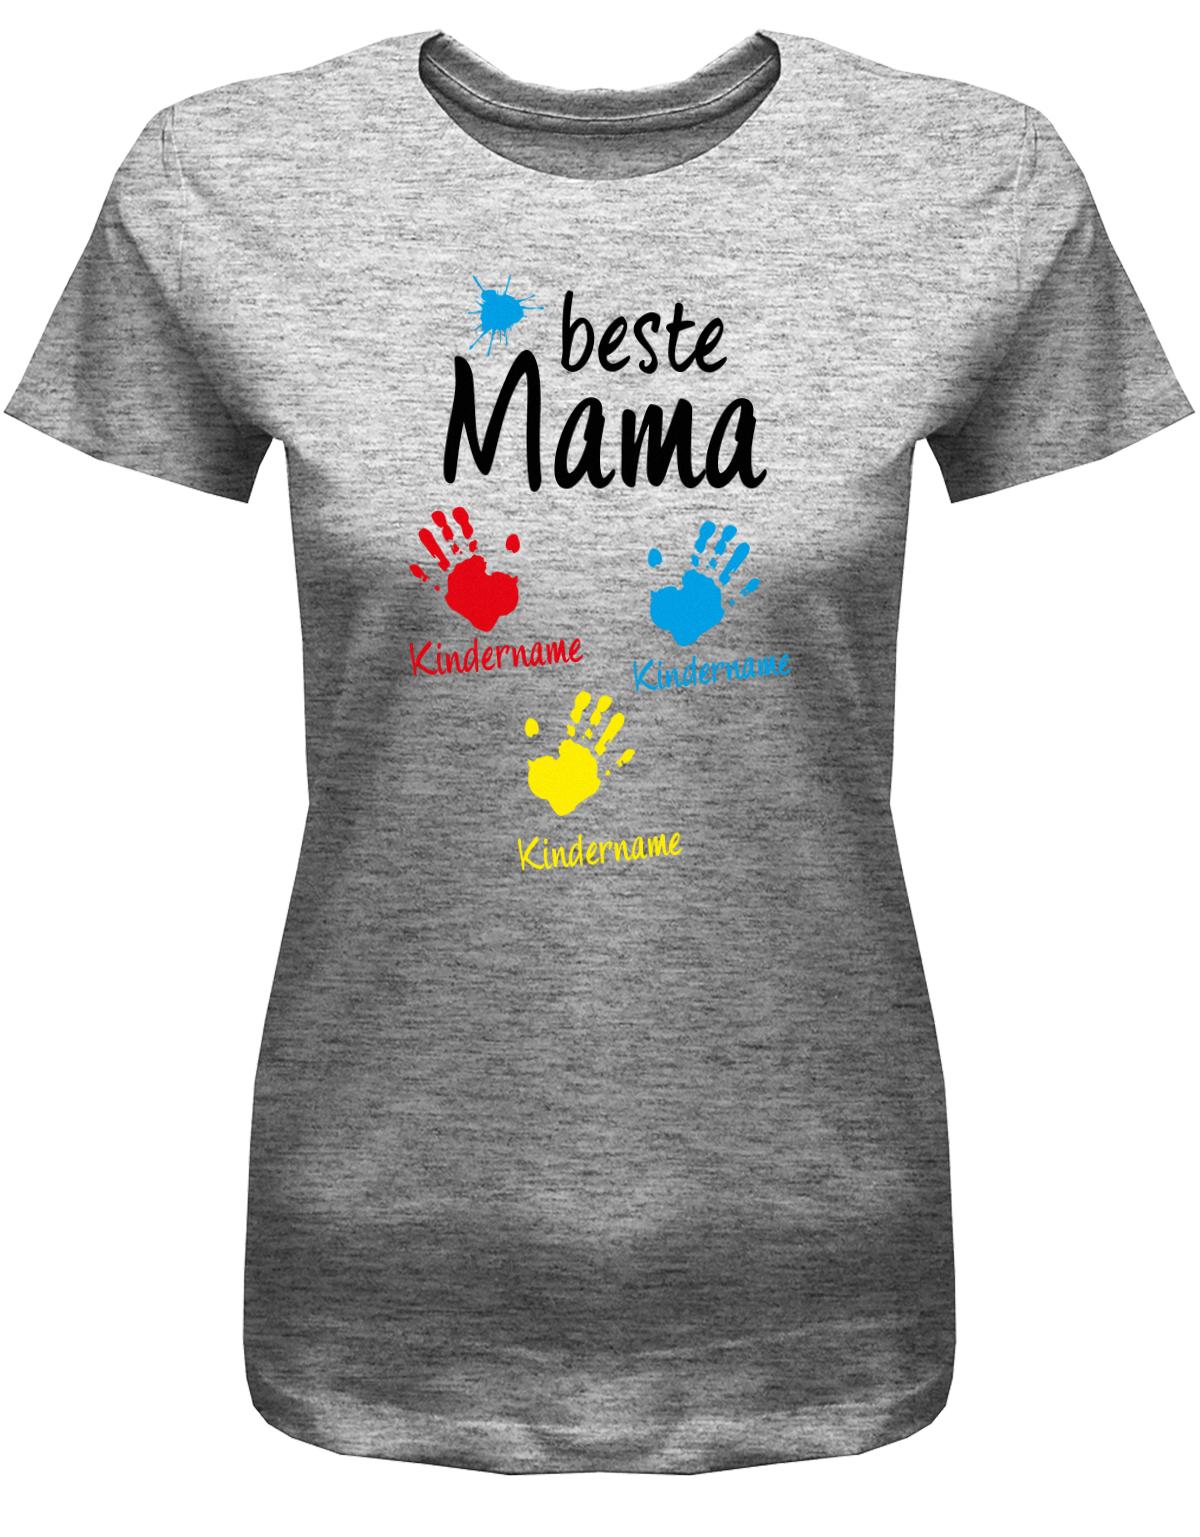 Beste-Mama-3-Kinder-Wusnchnamen-Damen-Shirt-Grau